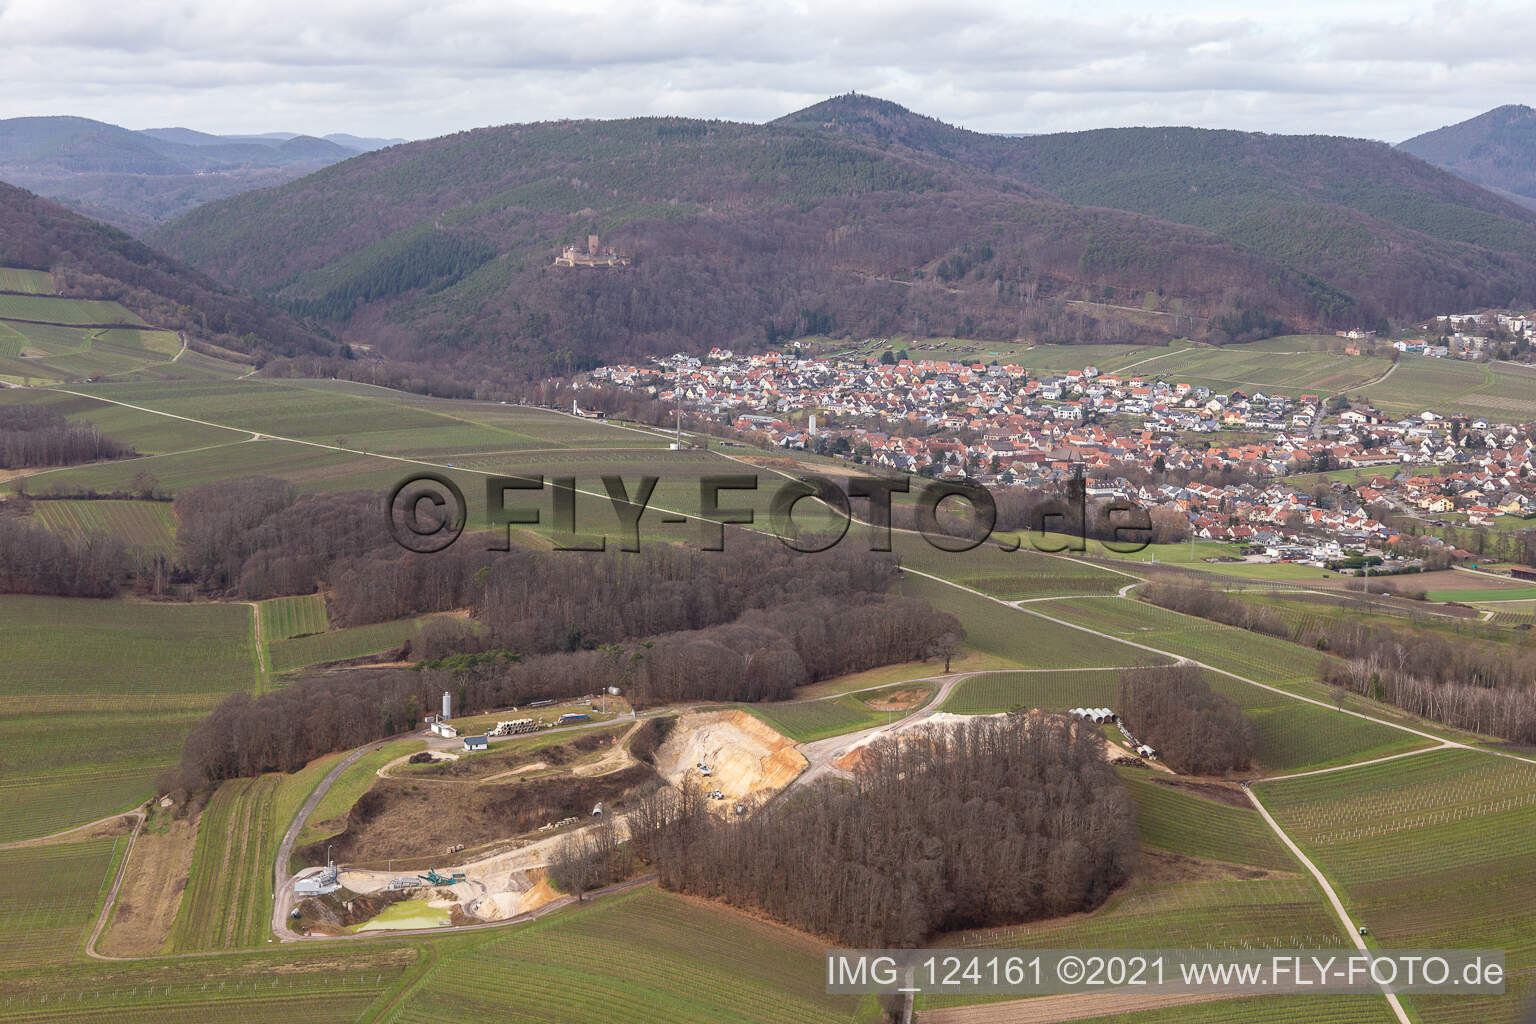 Landfill in the district Gleiszellen in Gleiszellen-Gleishorbach in the state Rhineland-Palatinate, Germany